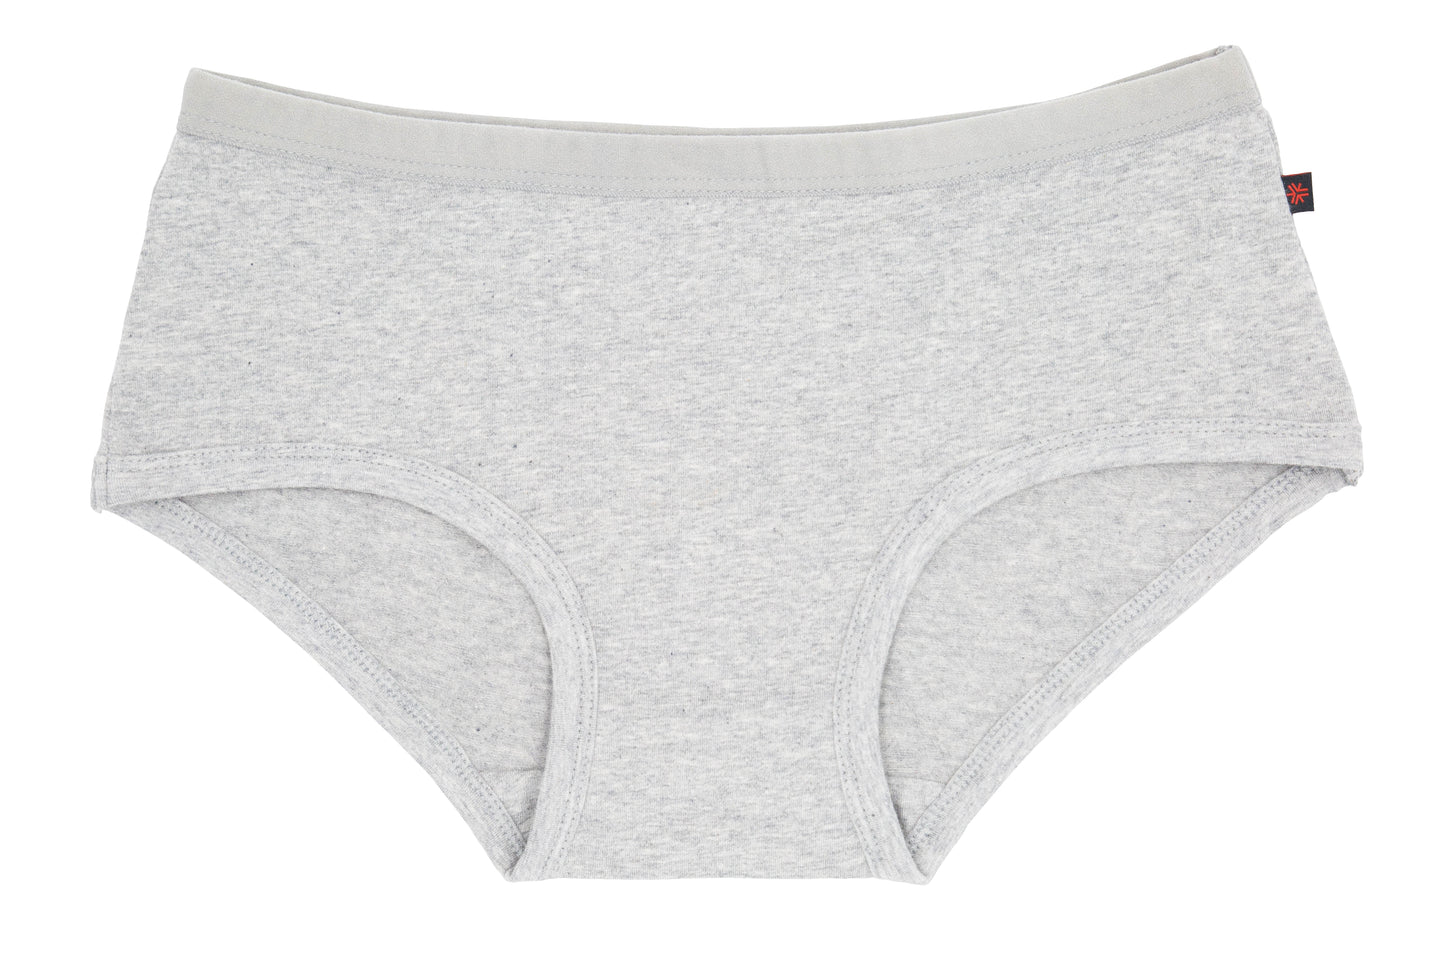 Heather grey colour boyfit underwear bundle ethically made with fairtrade certified organic cotton.